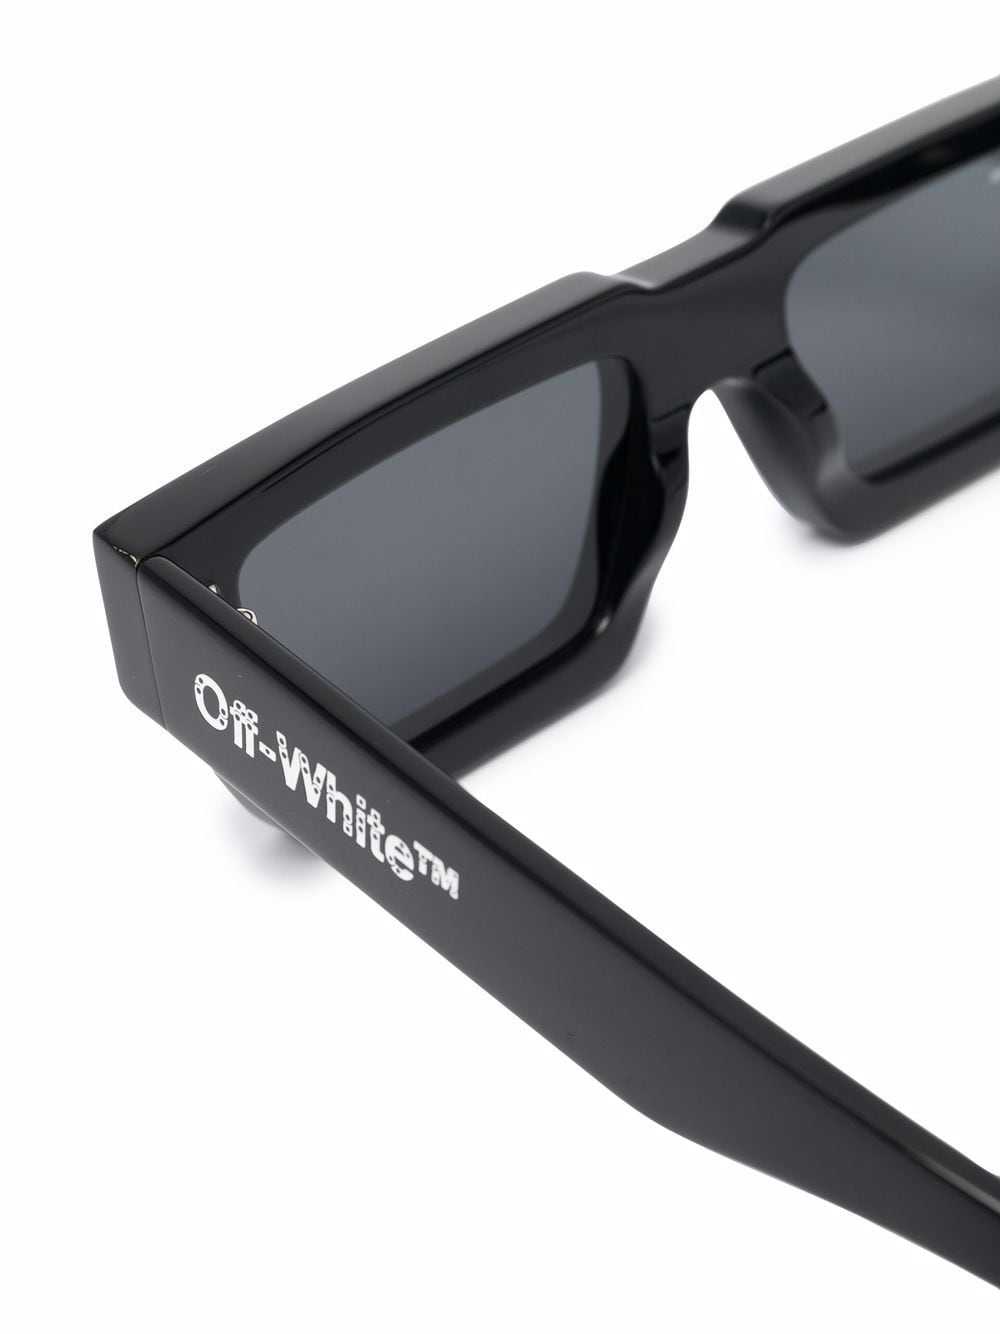 Off-White Men's Manchester Sunglasses Black, OERI002Y21PLA0011007